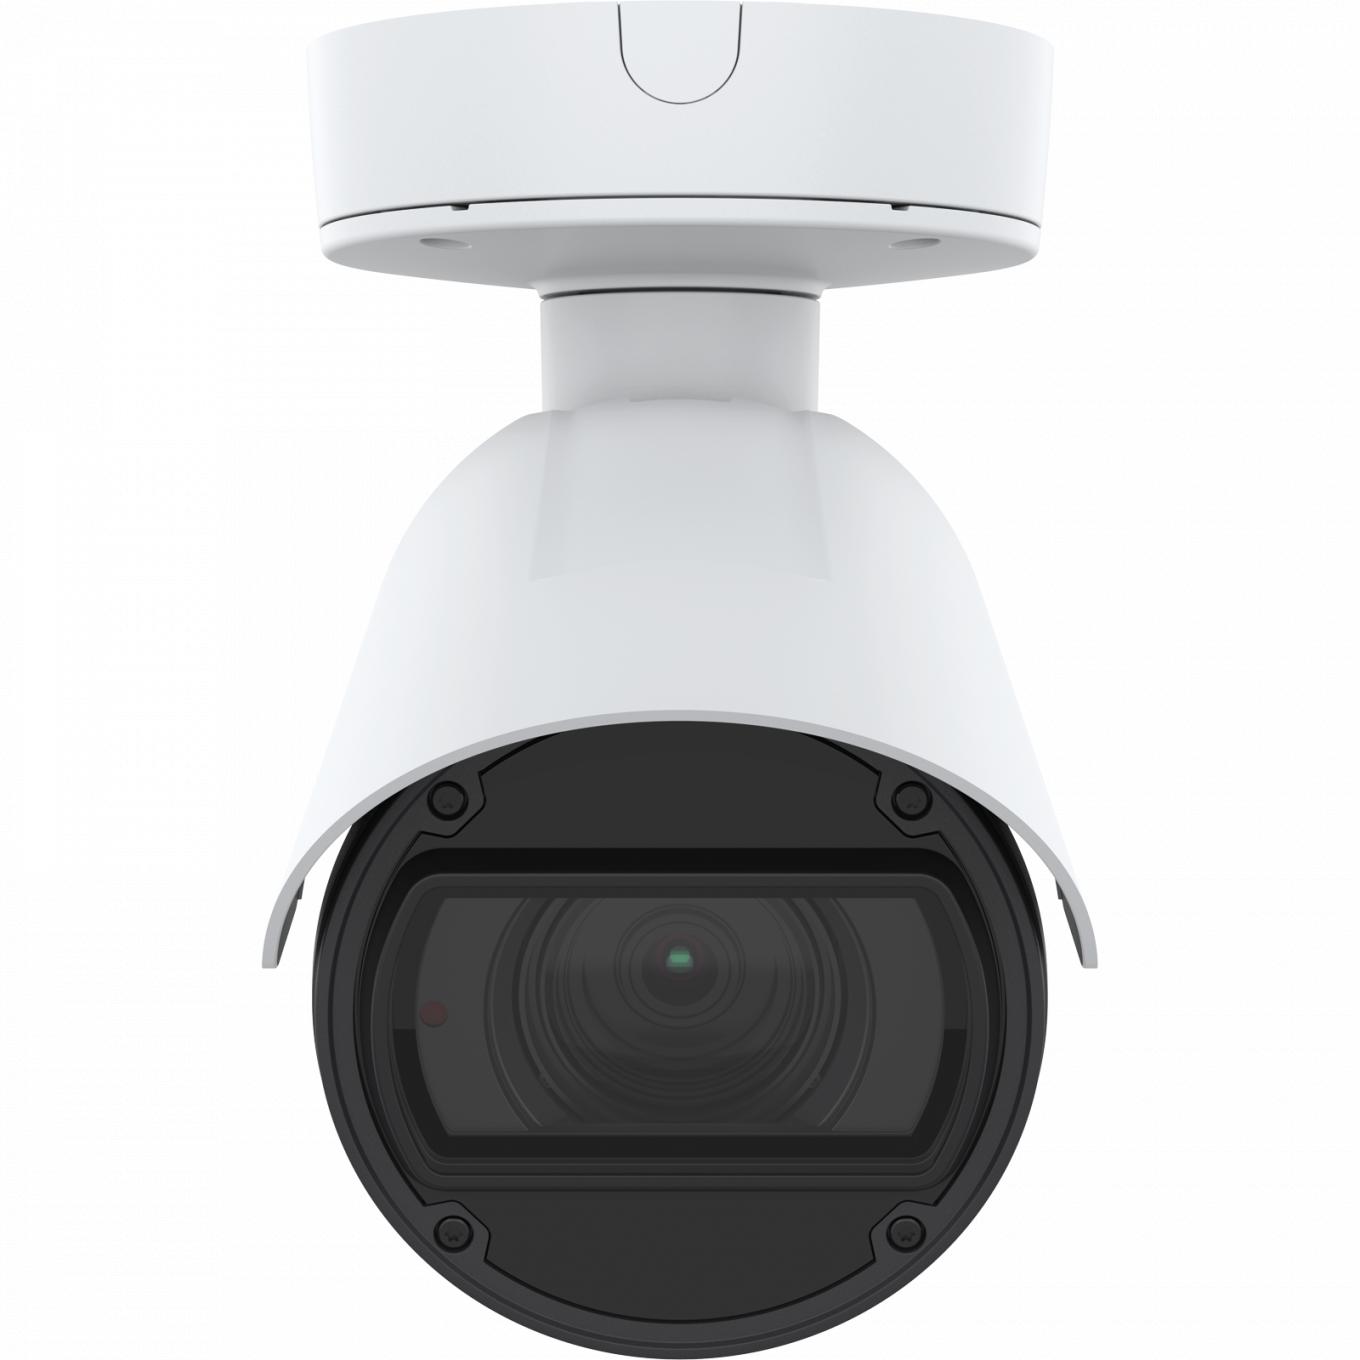 AXIS Q1785-LE IP Camera에는 OptimizedIR이 있습니다. 이 제품은 전면에서 본 것입니다.